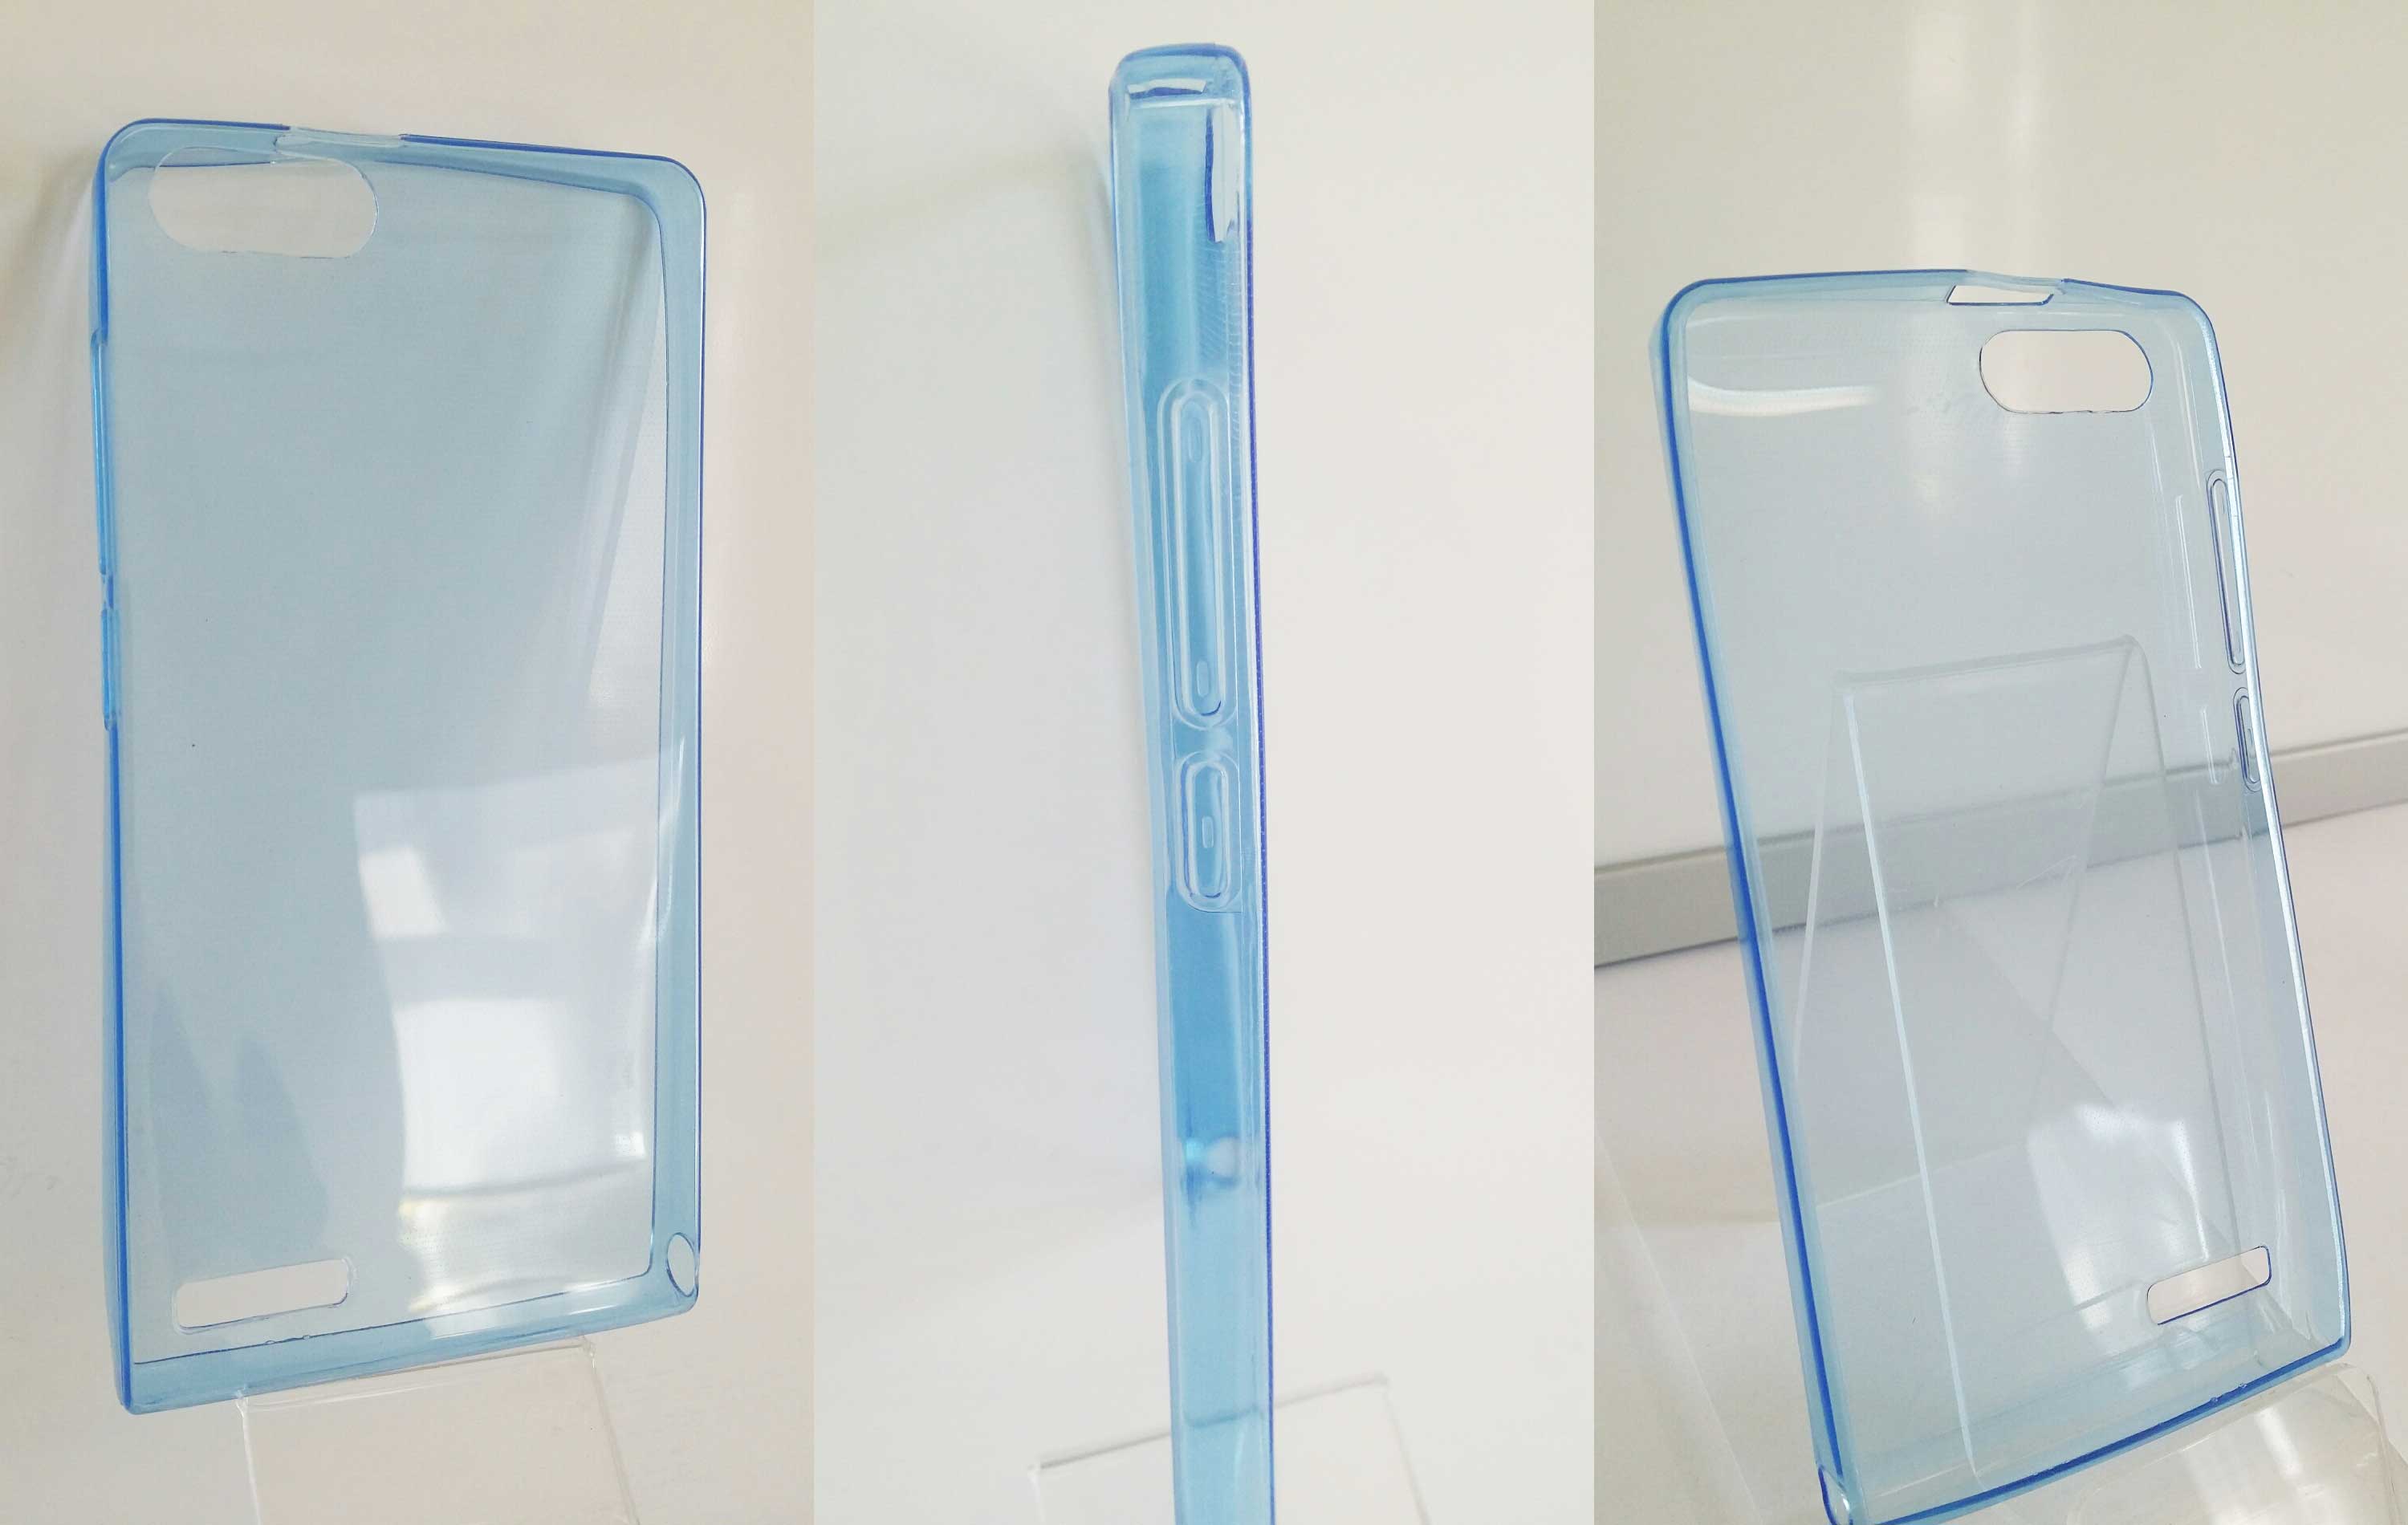 Silikonový obal ULTRA THIN na mobil Huawei Ascend G6 modrá barva silikon tenké